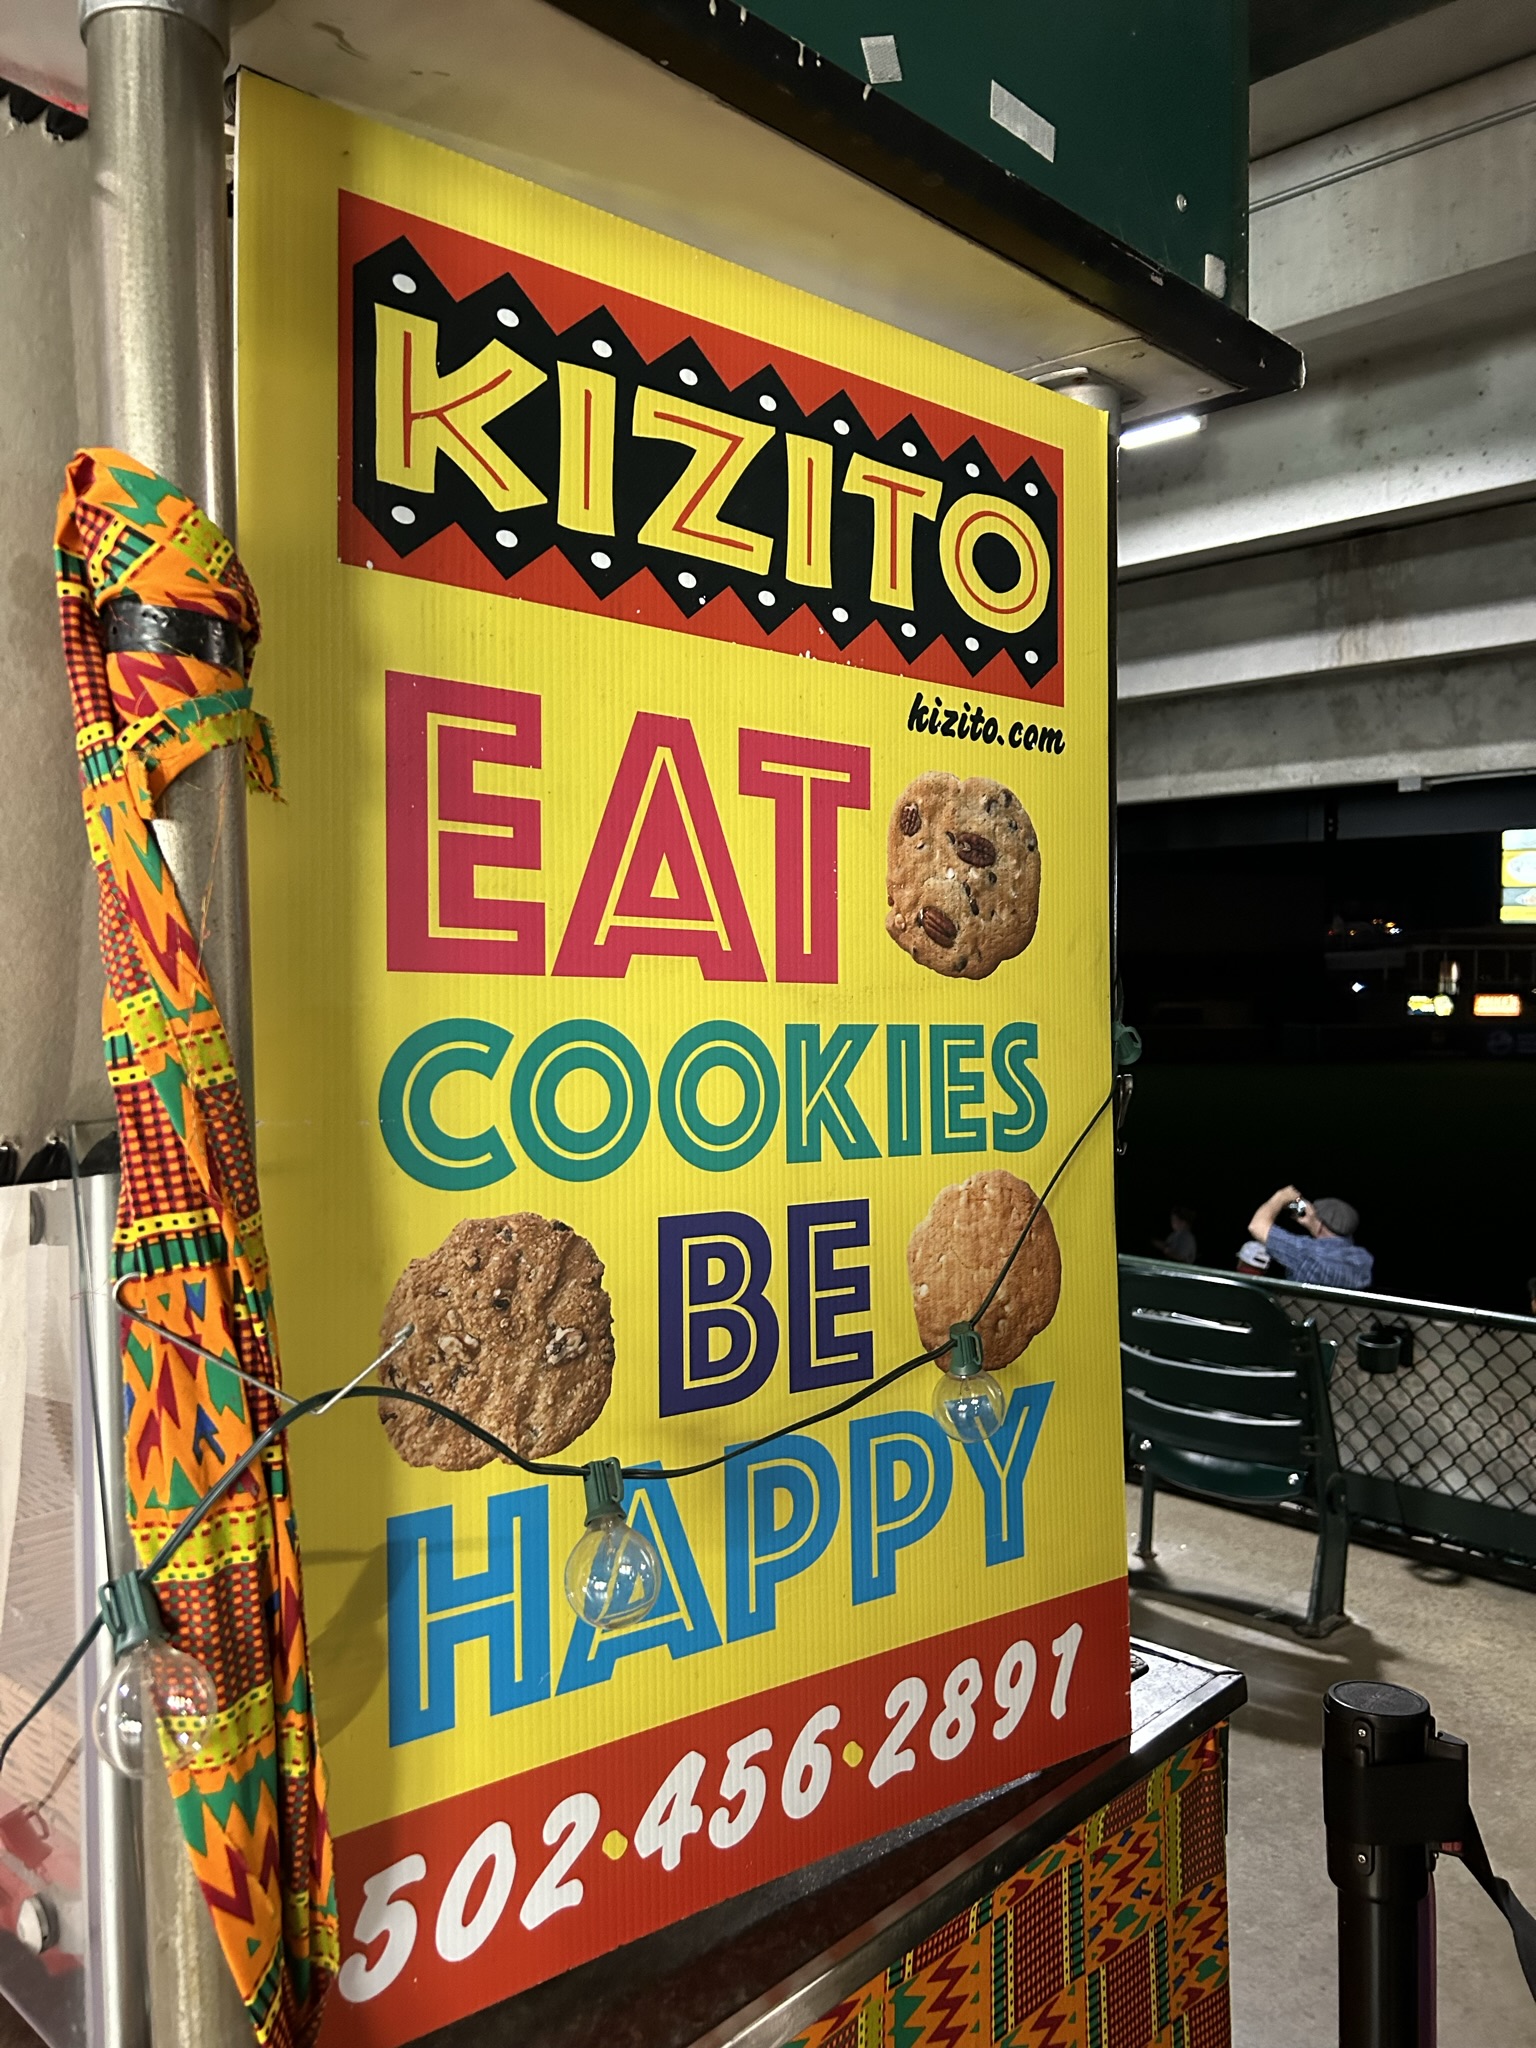 Kizito cookies